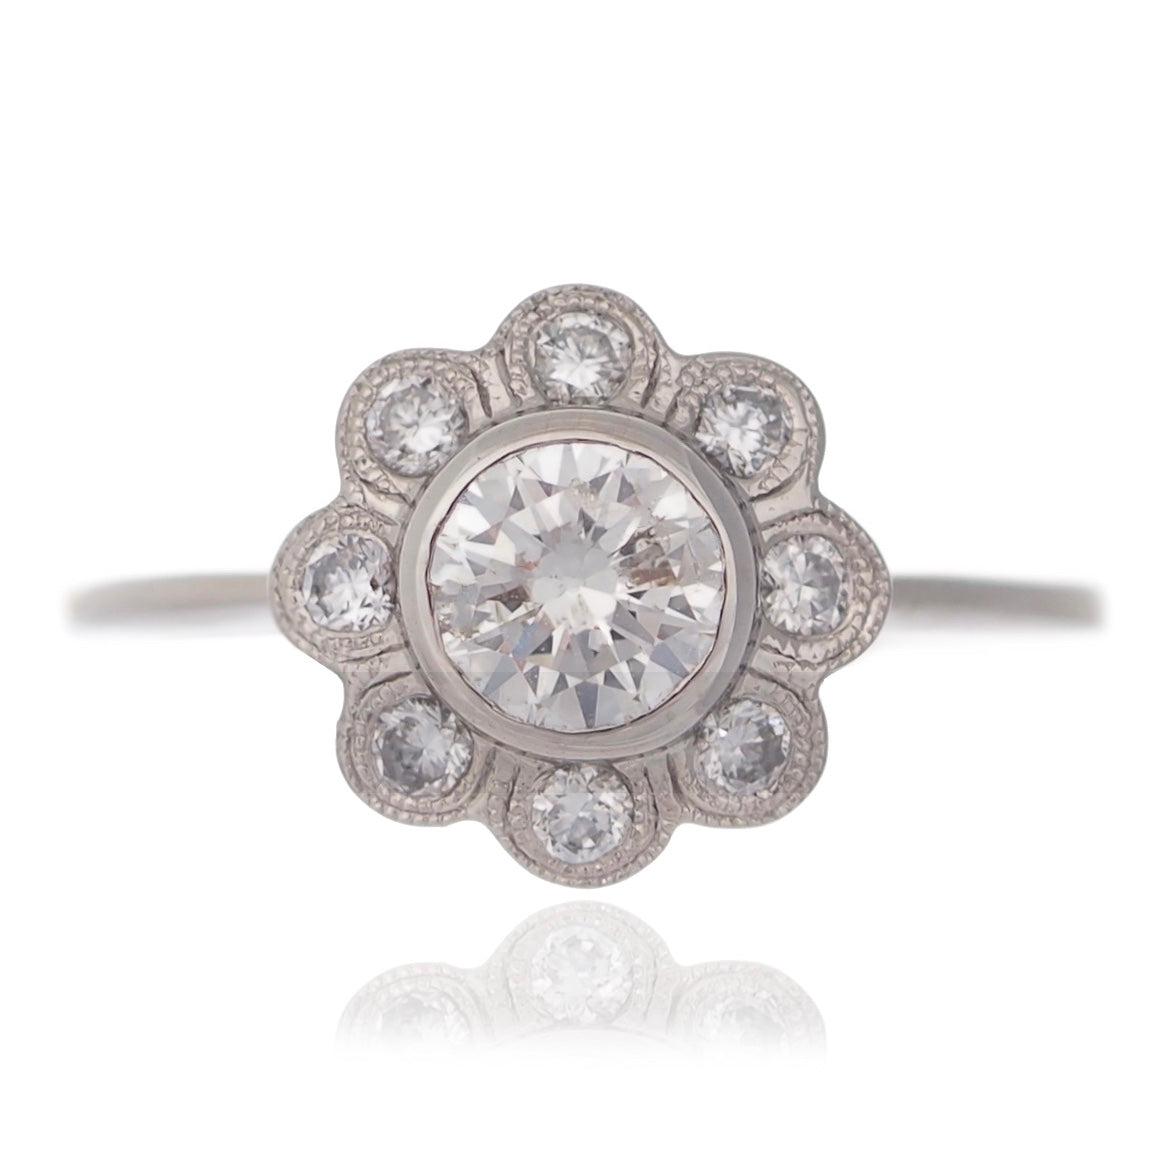 Diamond dress ring vintage inspired flower design Round brilliant diamonds millegraine setting white gold Harrogate jewellers Fogal and barnes 